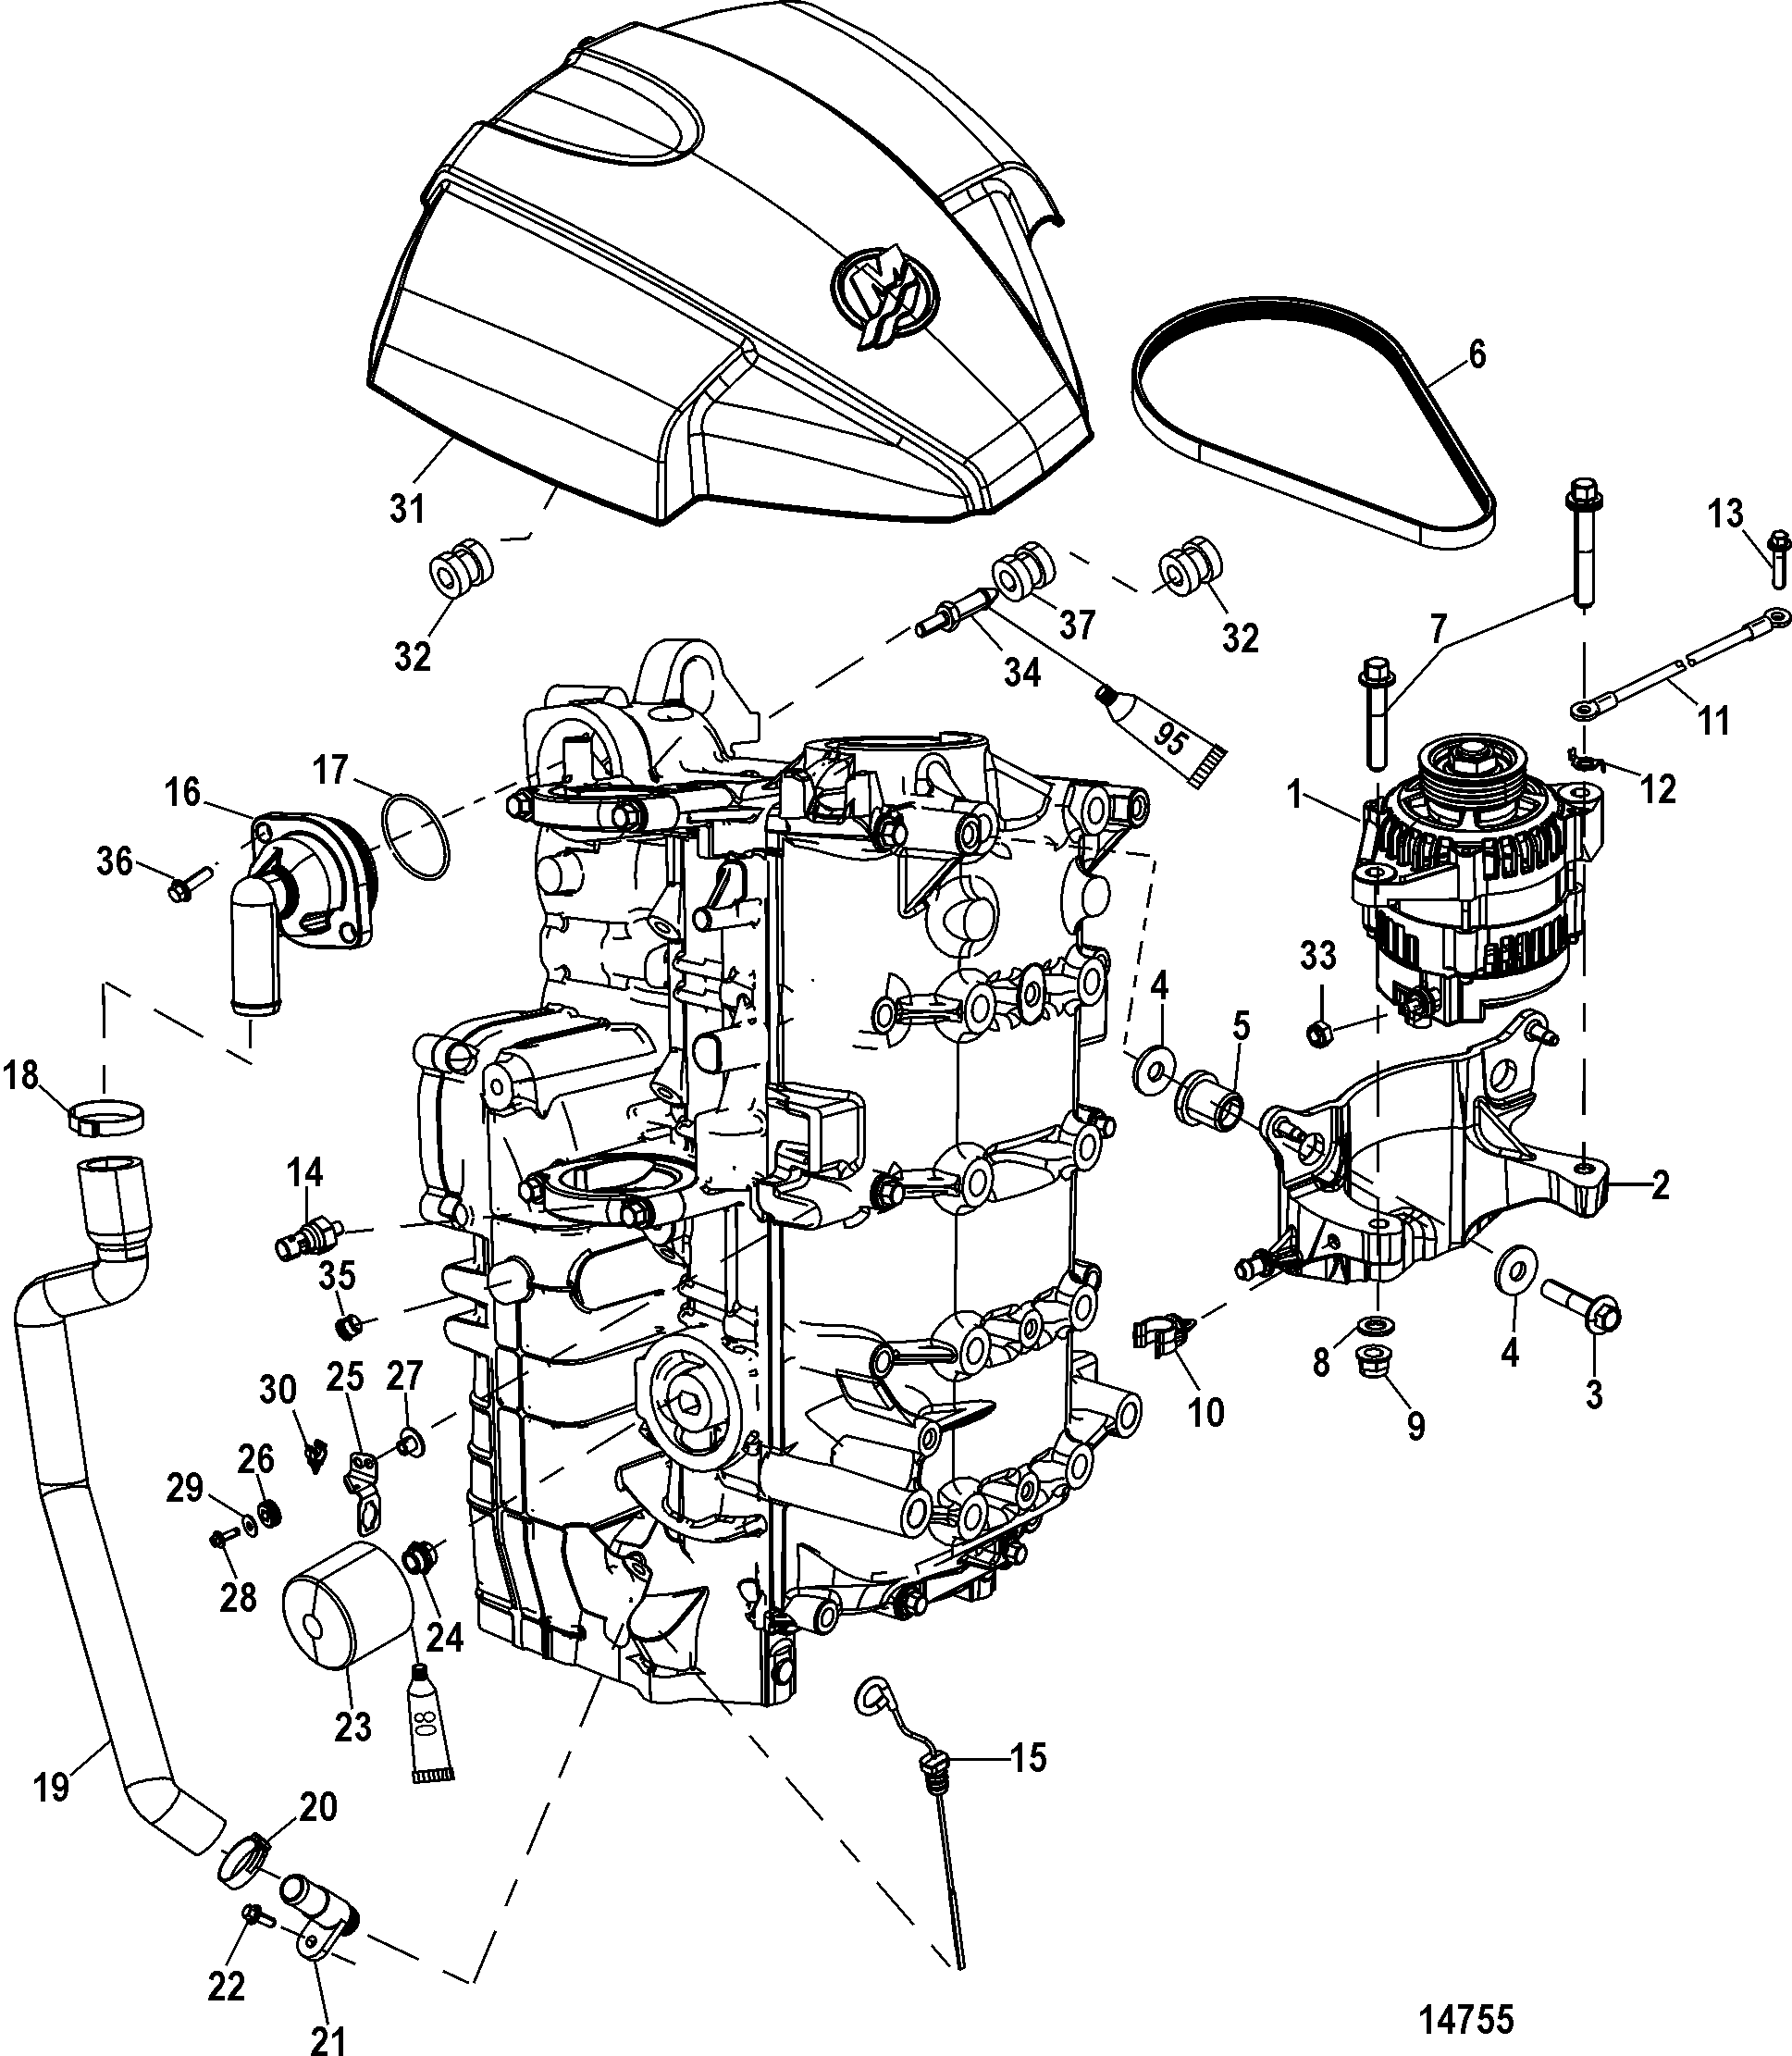 Alternator/Starboard Cylinder Block Components